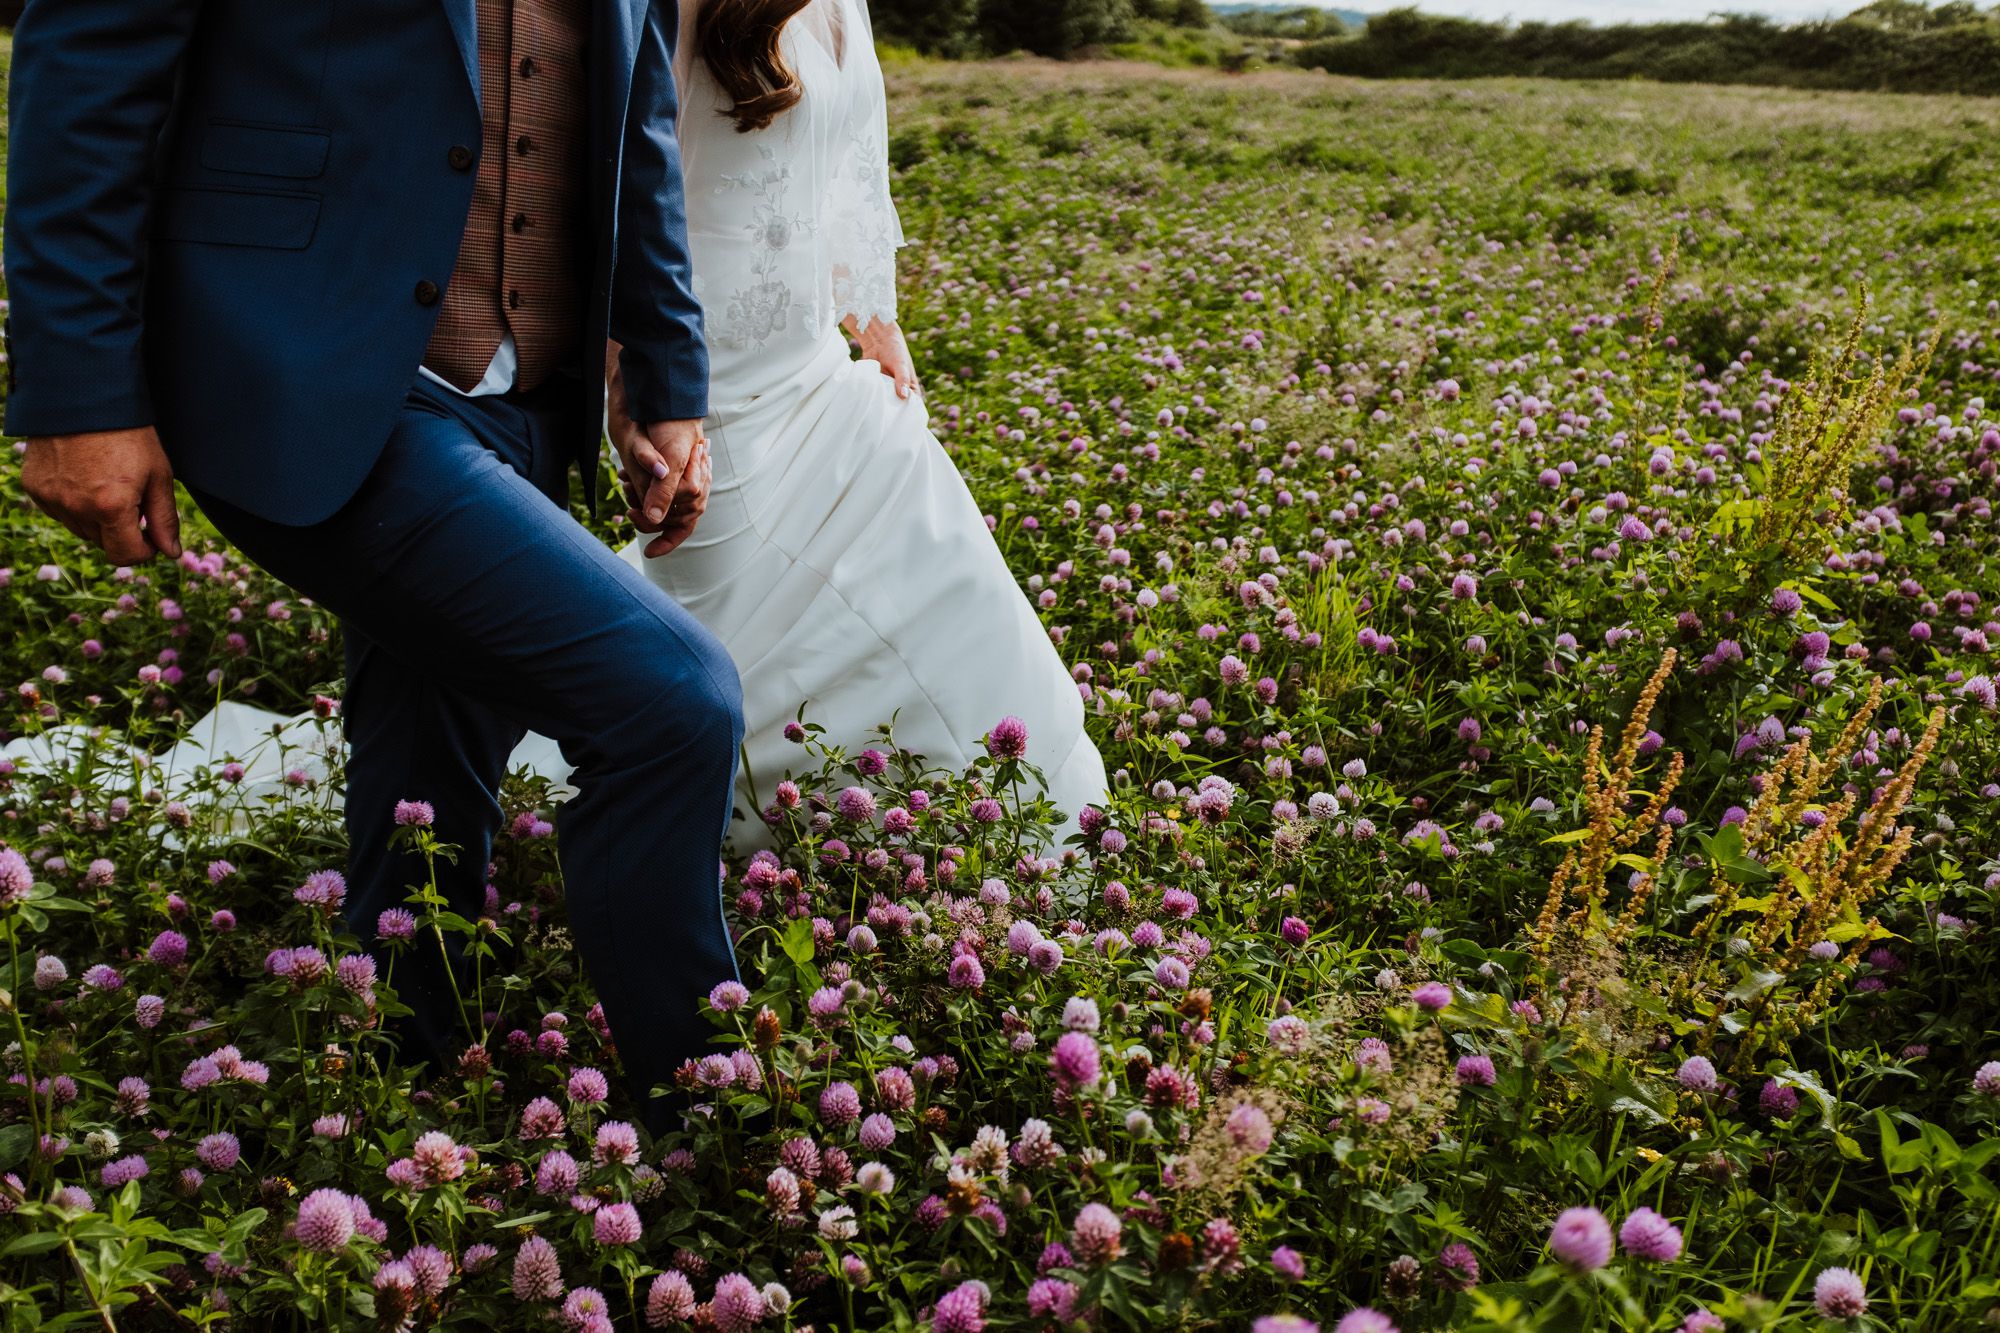 segrave-house-bride-groom-walk-in-field